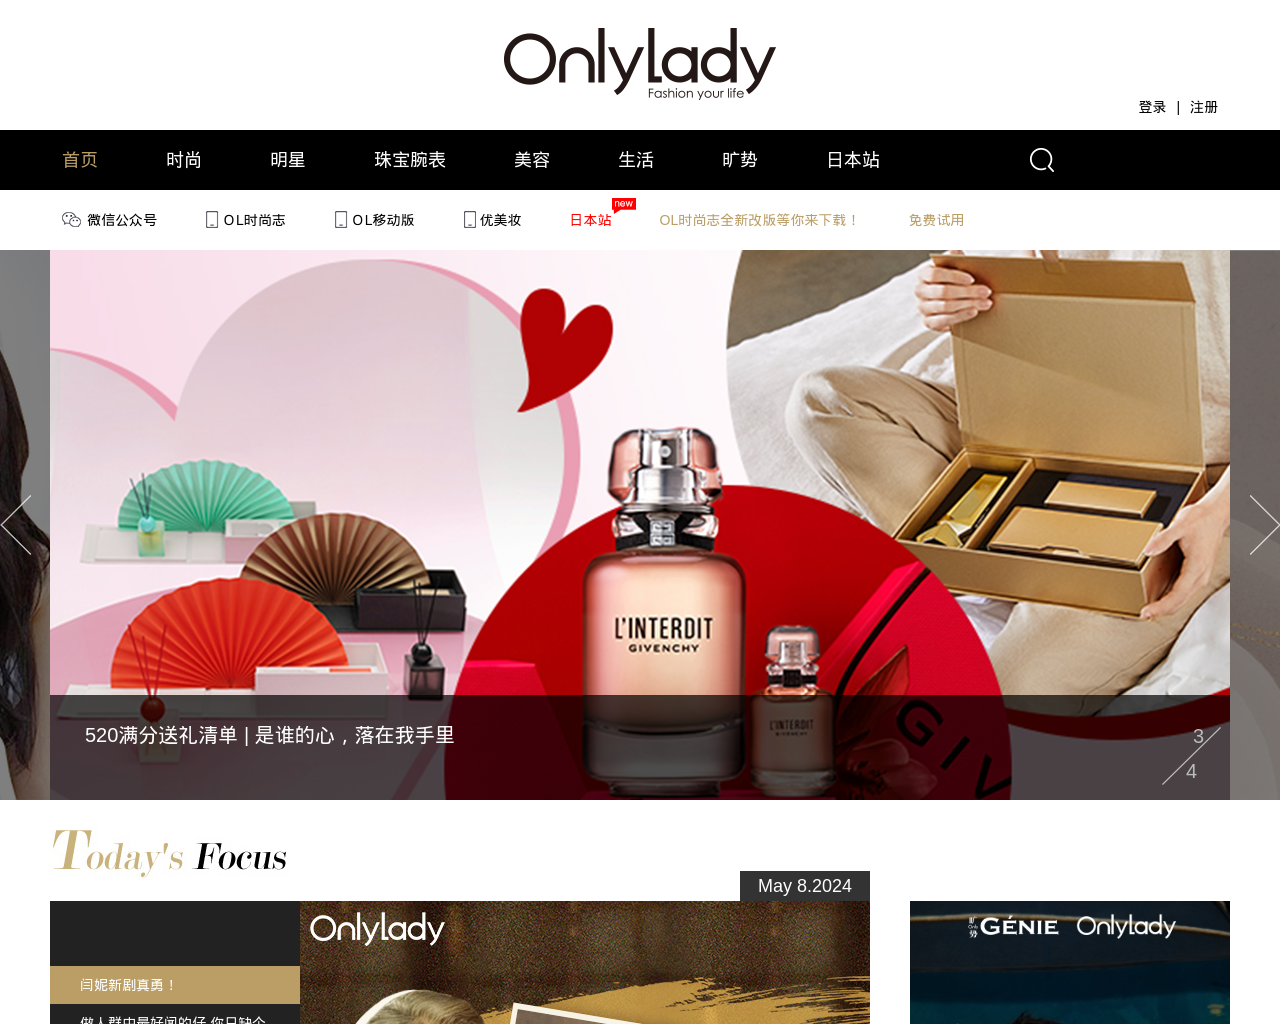 onlylady.com